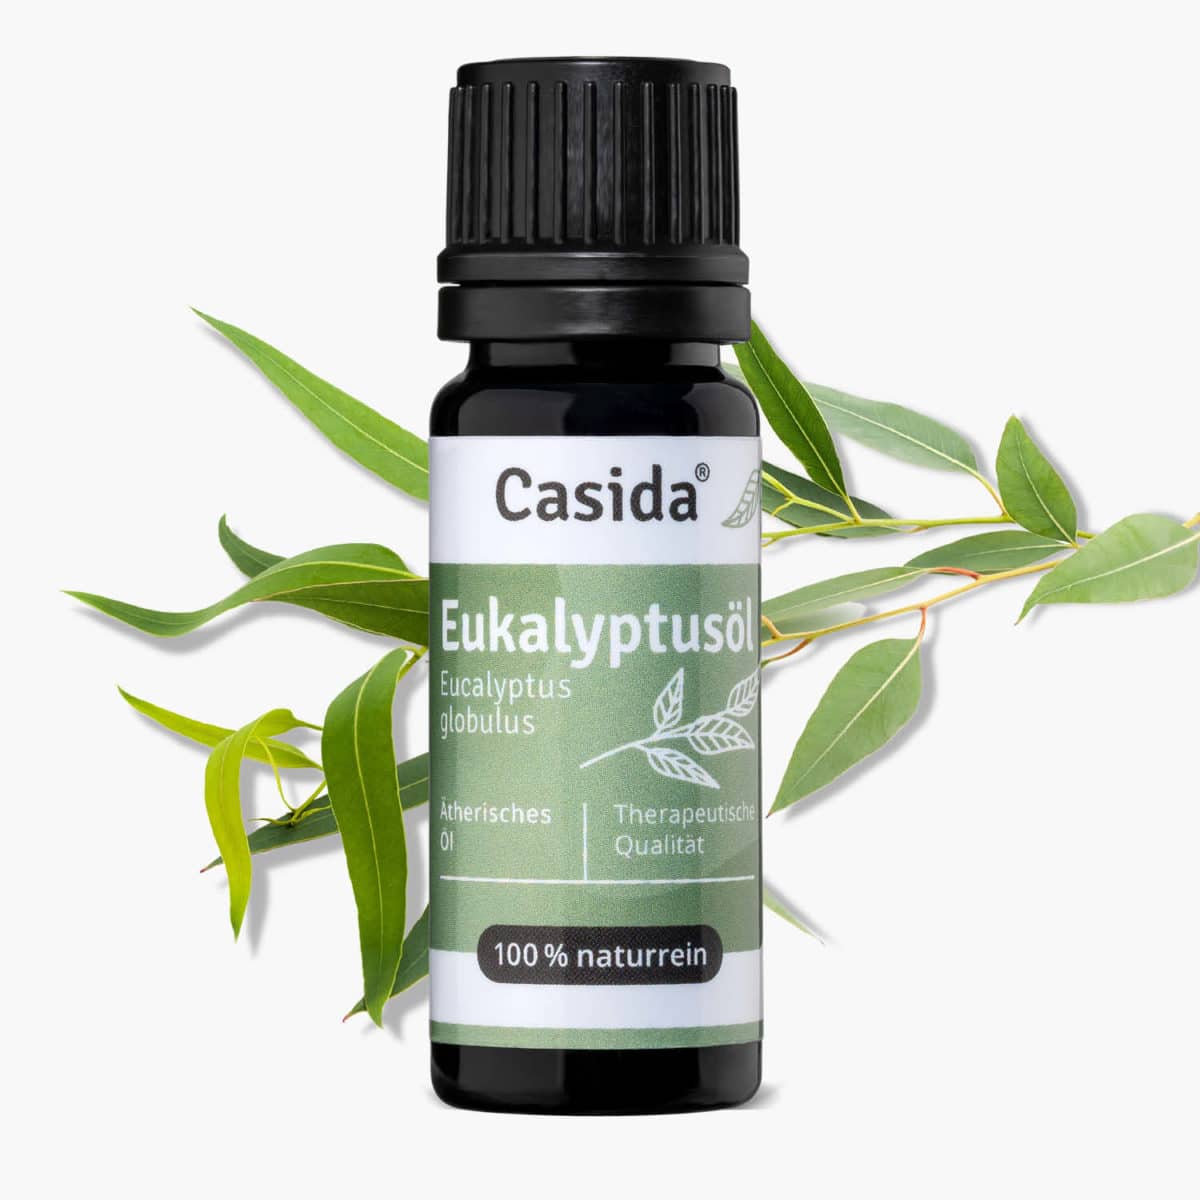 Casida Eucalyptus Oil naturrein – 10 ml 15880716 PZN Apotheke ätherische Öle Diffuser